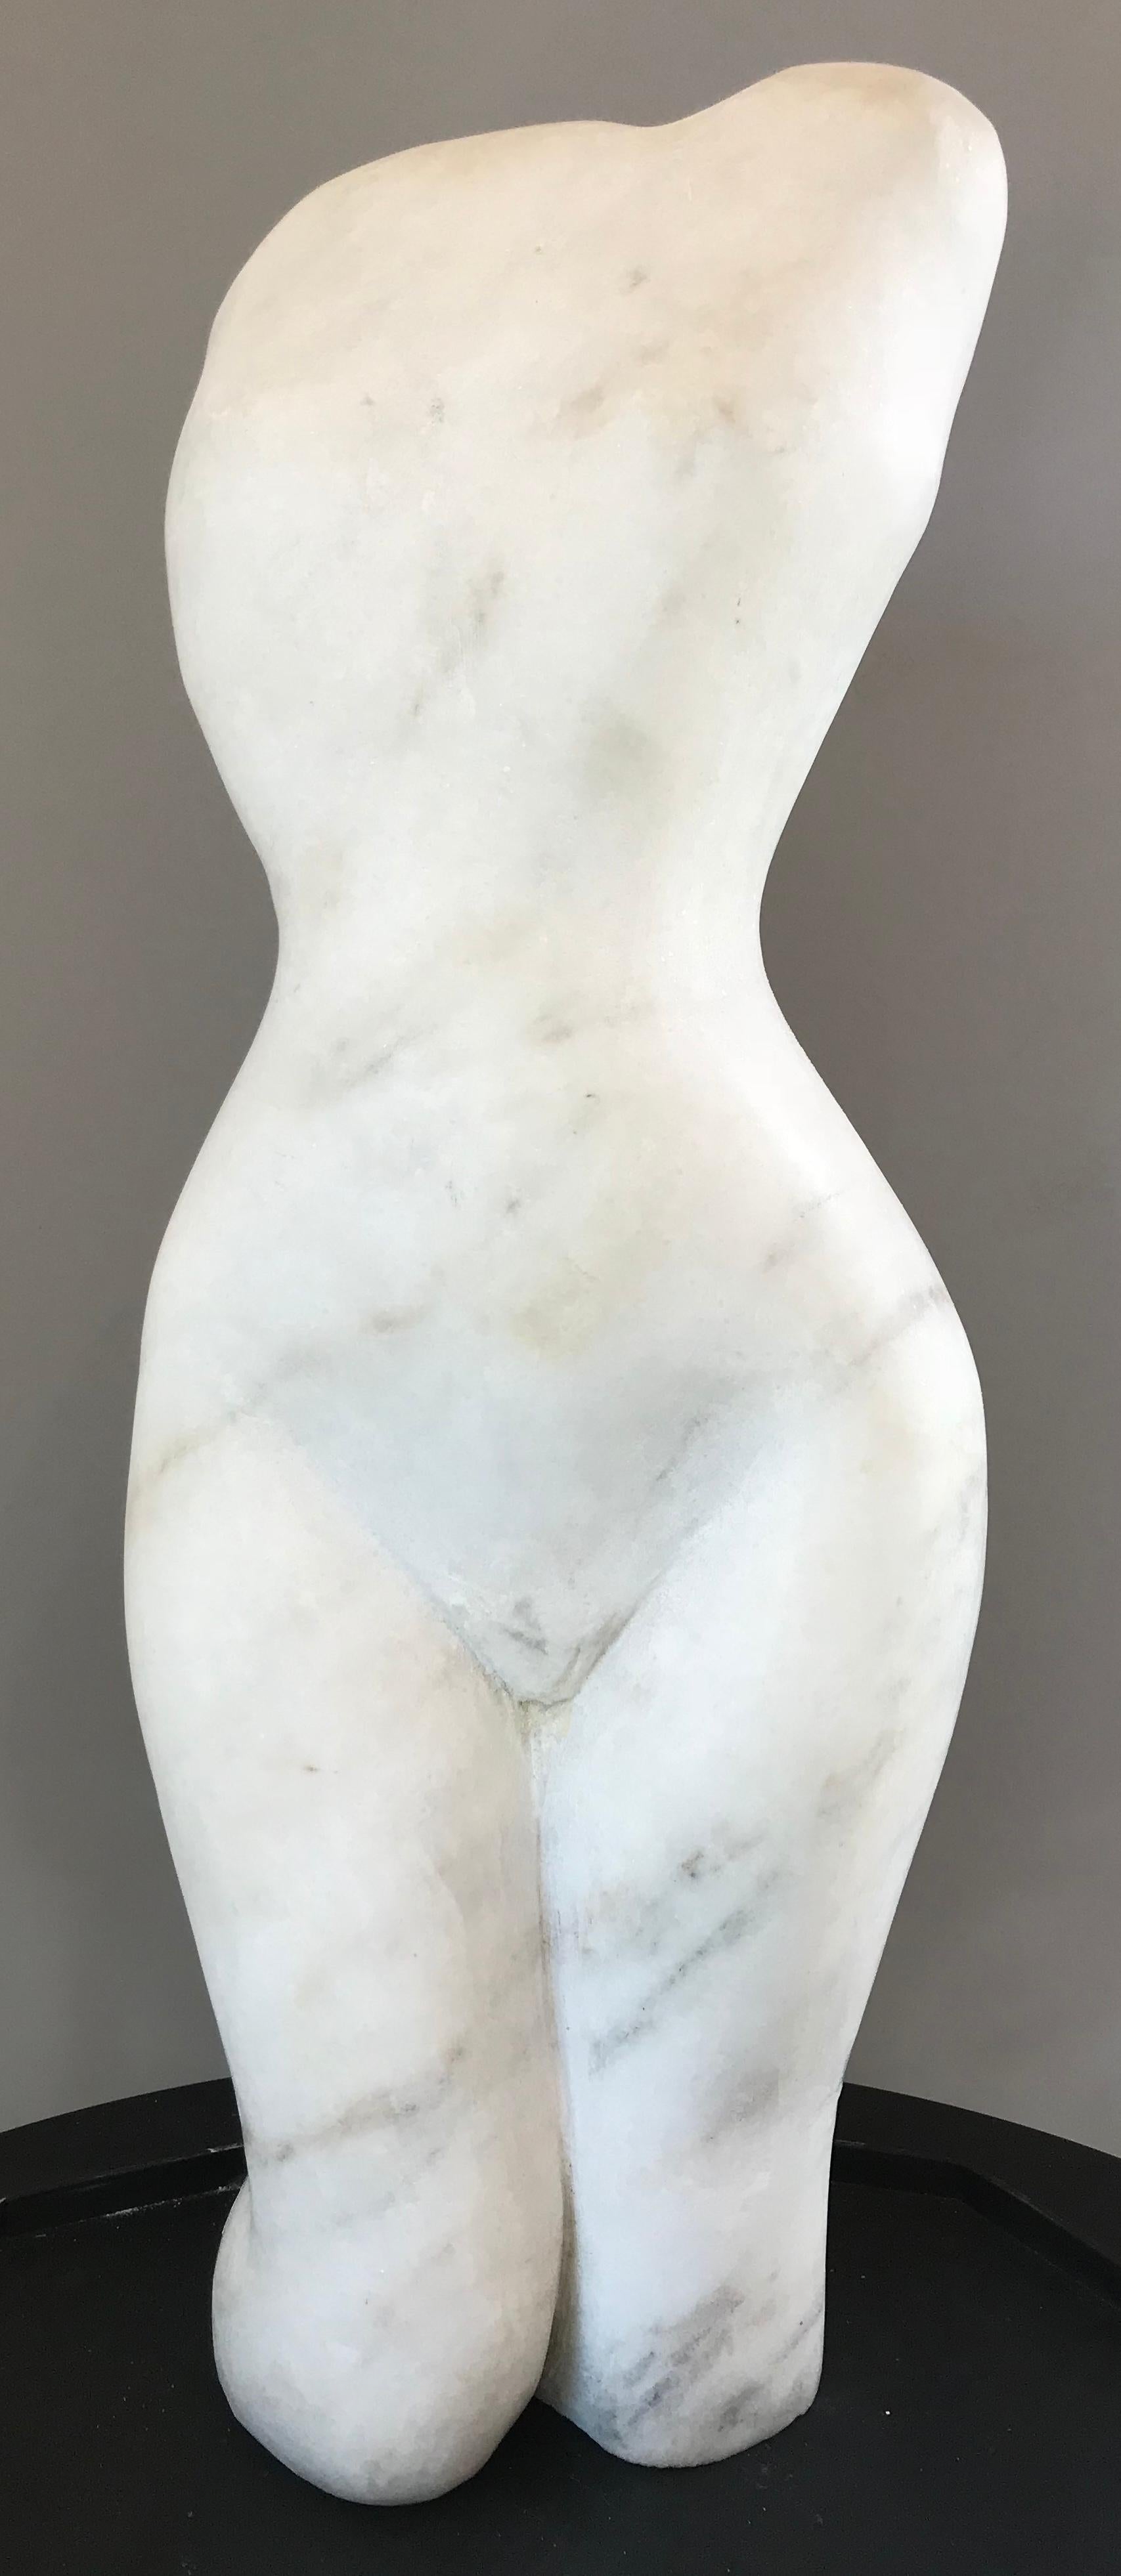 Michael Patterson Nude Sculpture - "Female Torso"